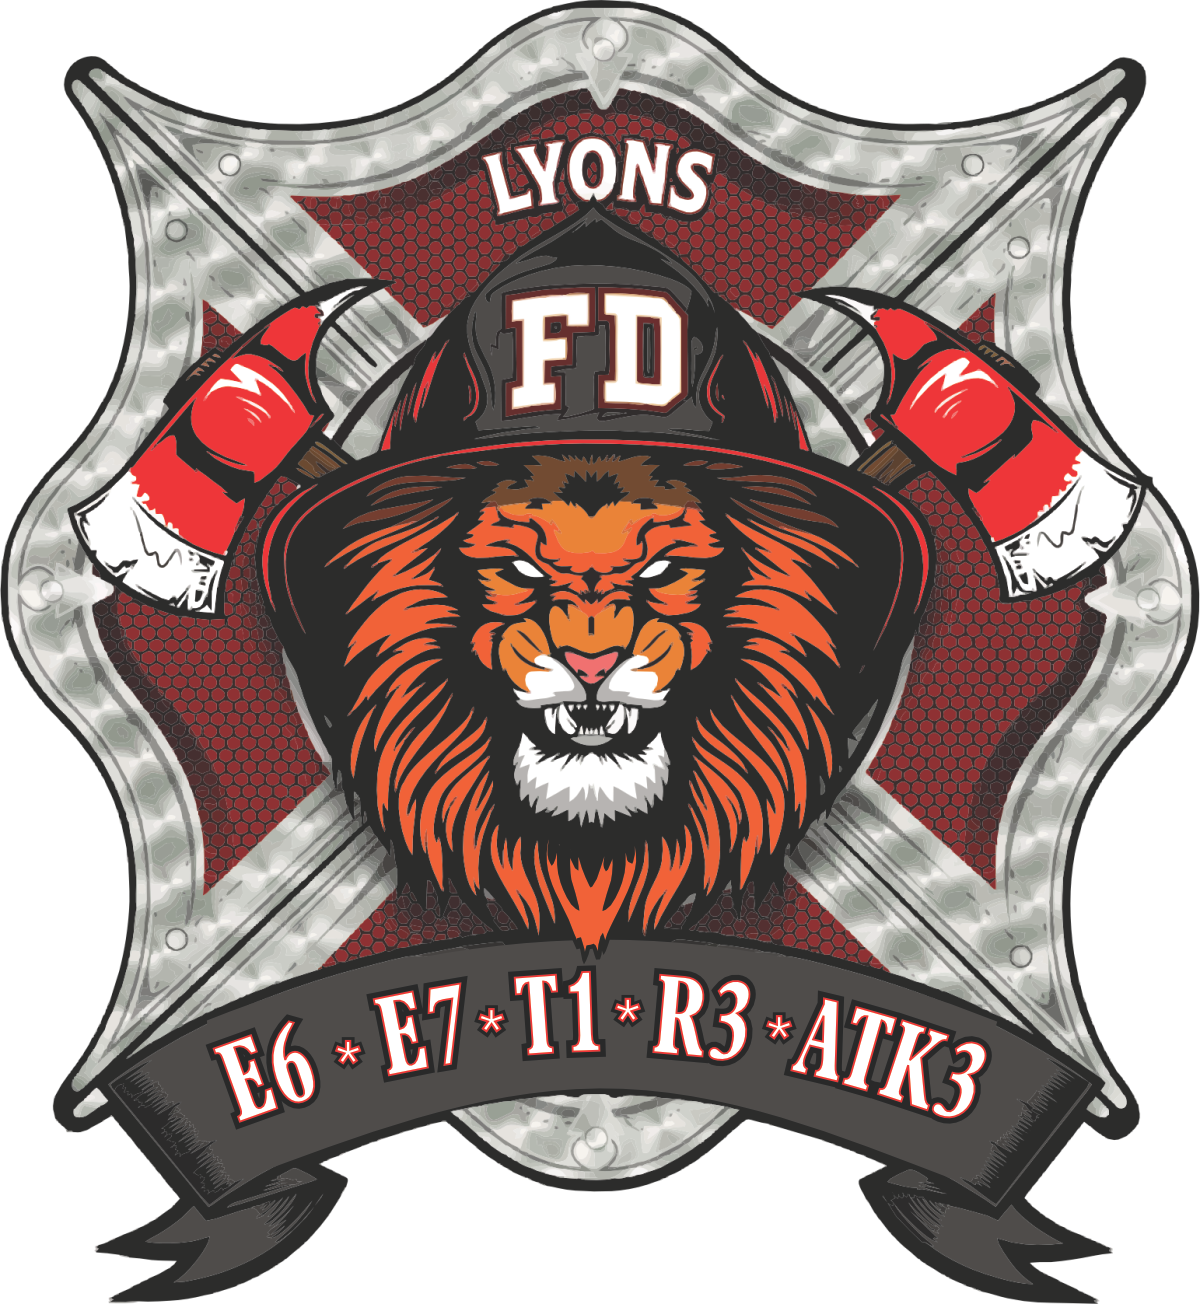 Lyons Fire Department